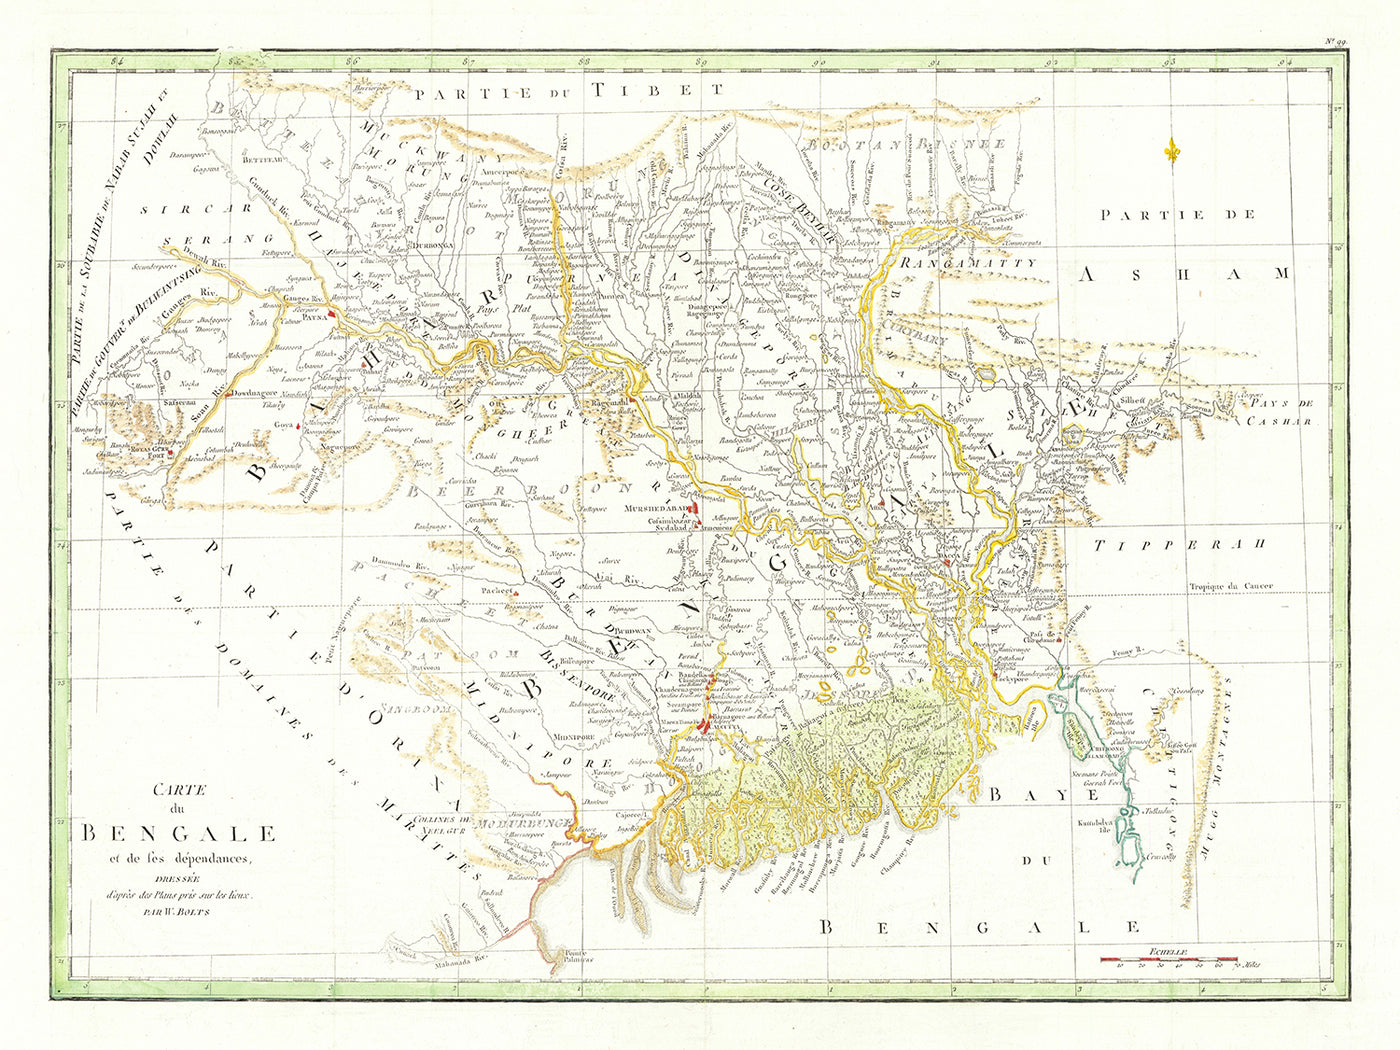 Old Map of Eastern India and Bangladesh by William Bolts, 1773: Calcutta, Dacca, Patna, Murshidabad